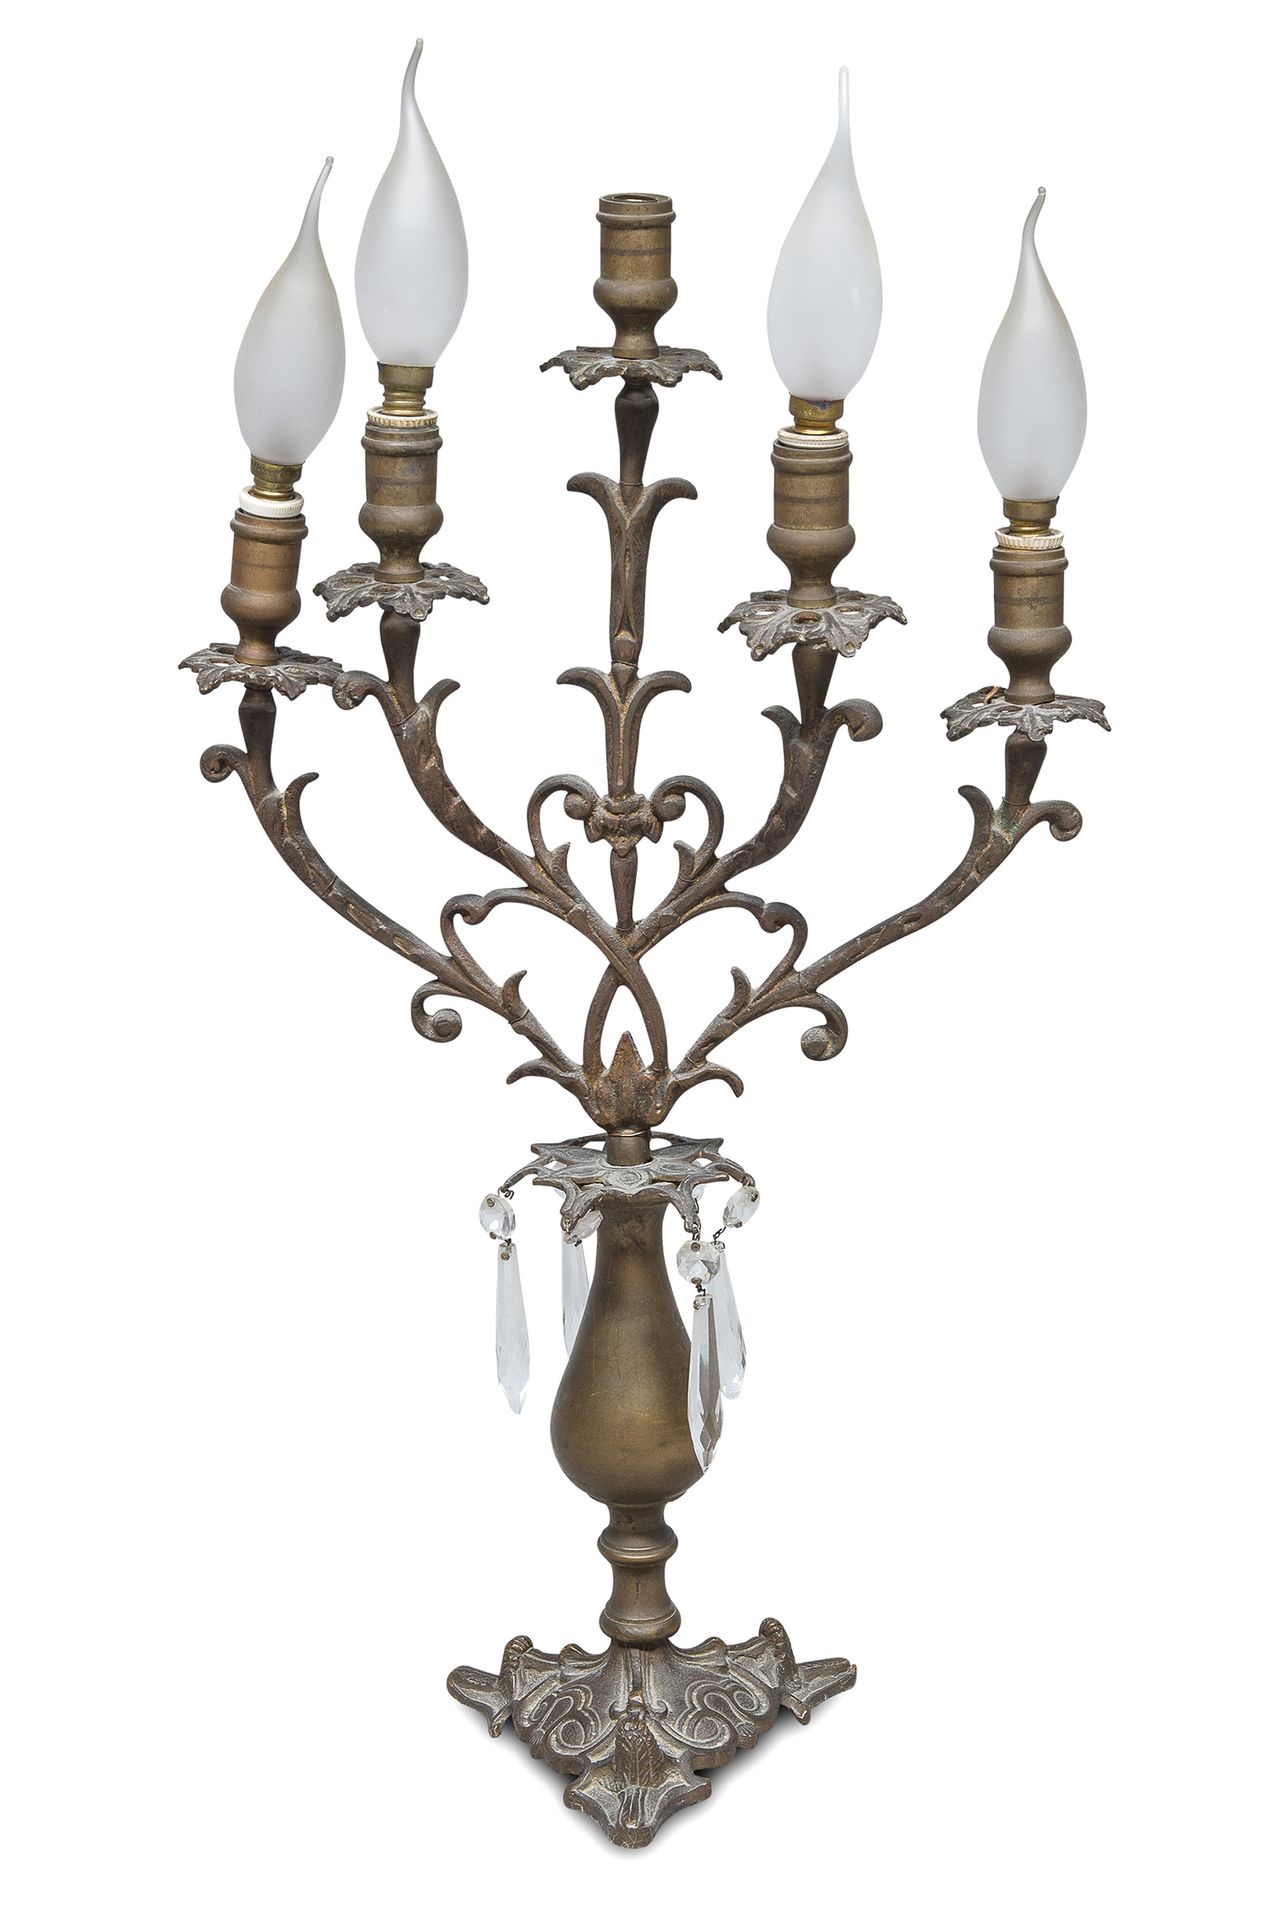 Null 燃烧的青铜烛台，19世纪


五臂的烛台，有球状的茎和脚，也有花纹。


尺寸为54 x 31 x 15厘米。